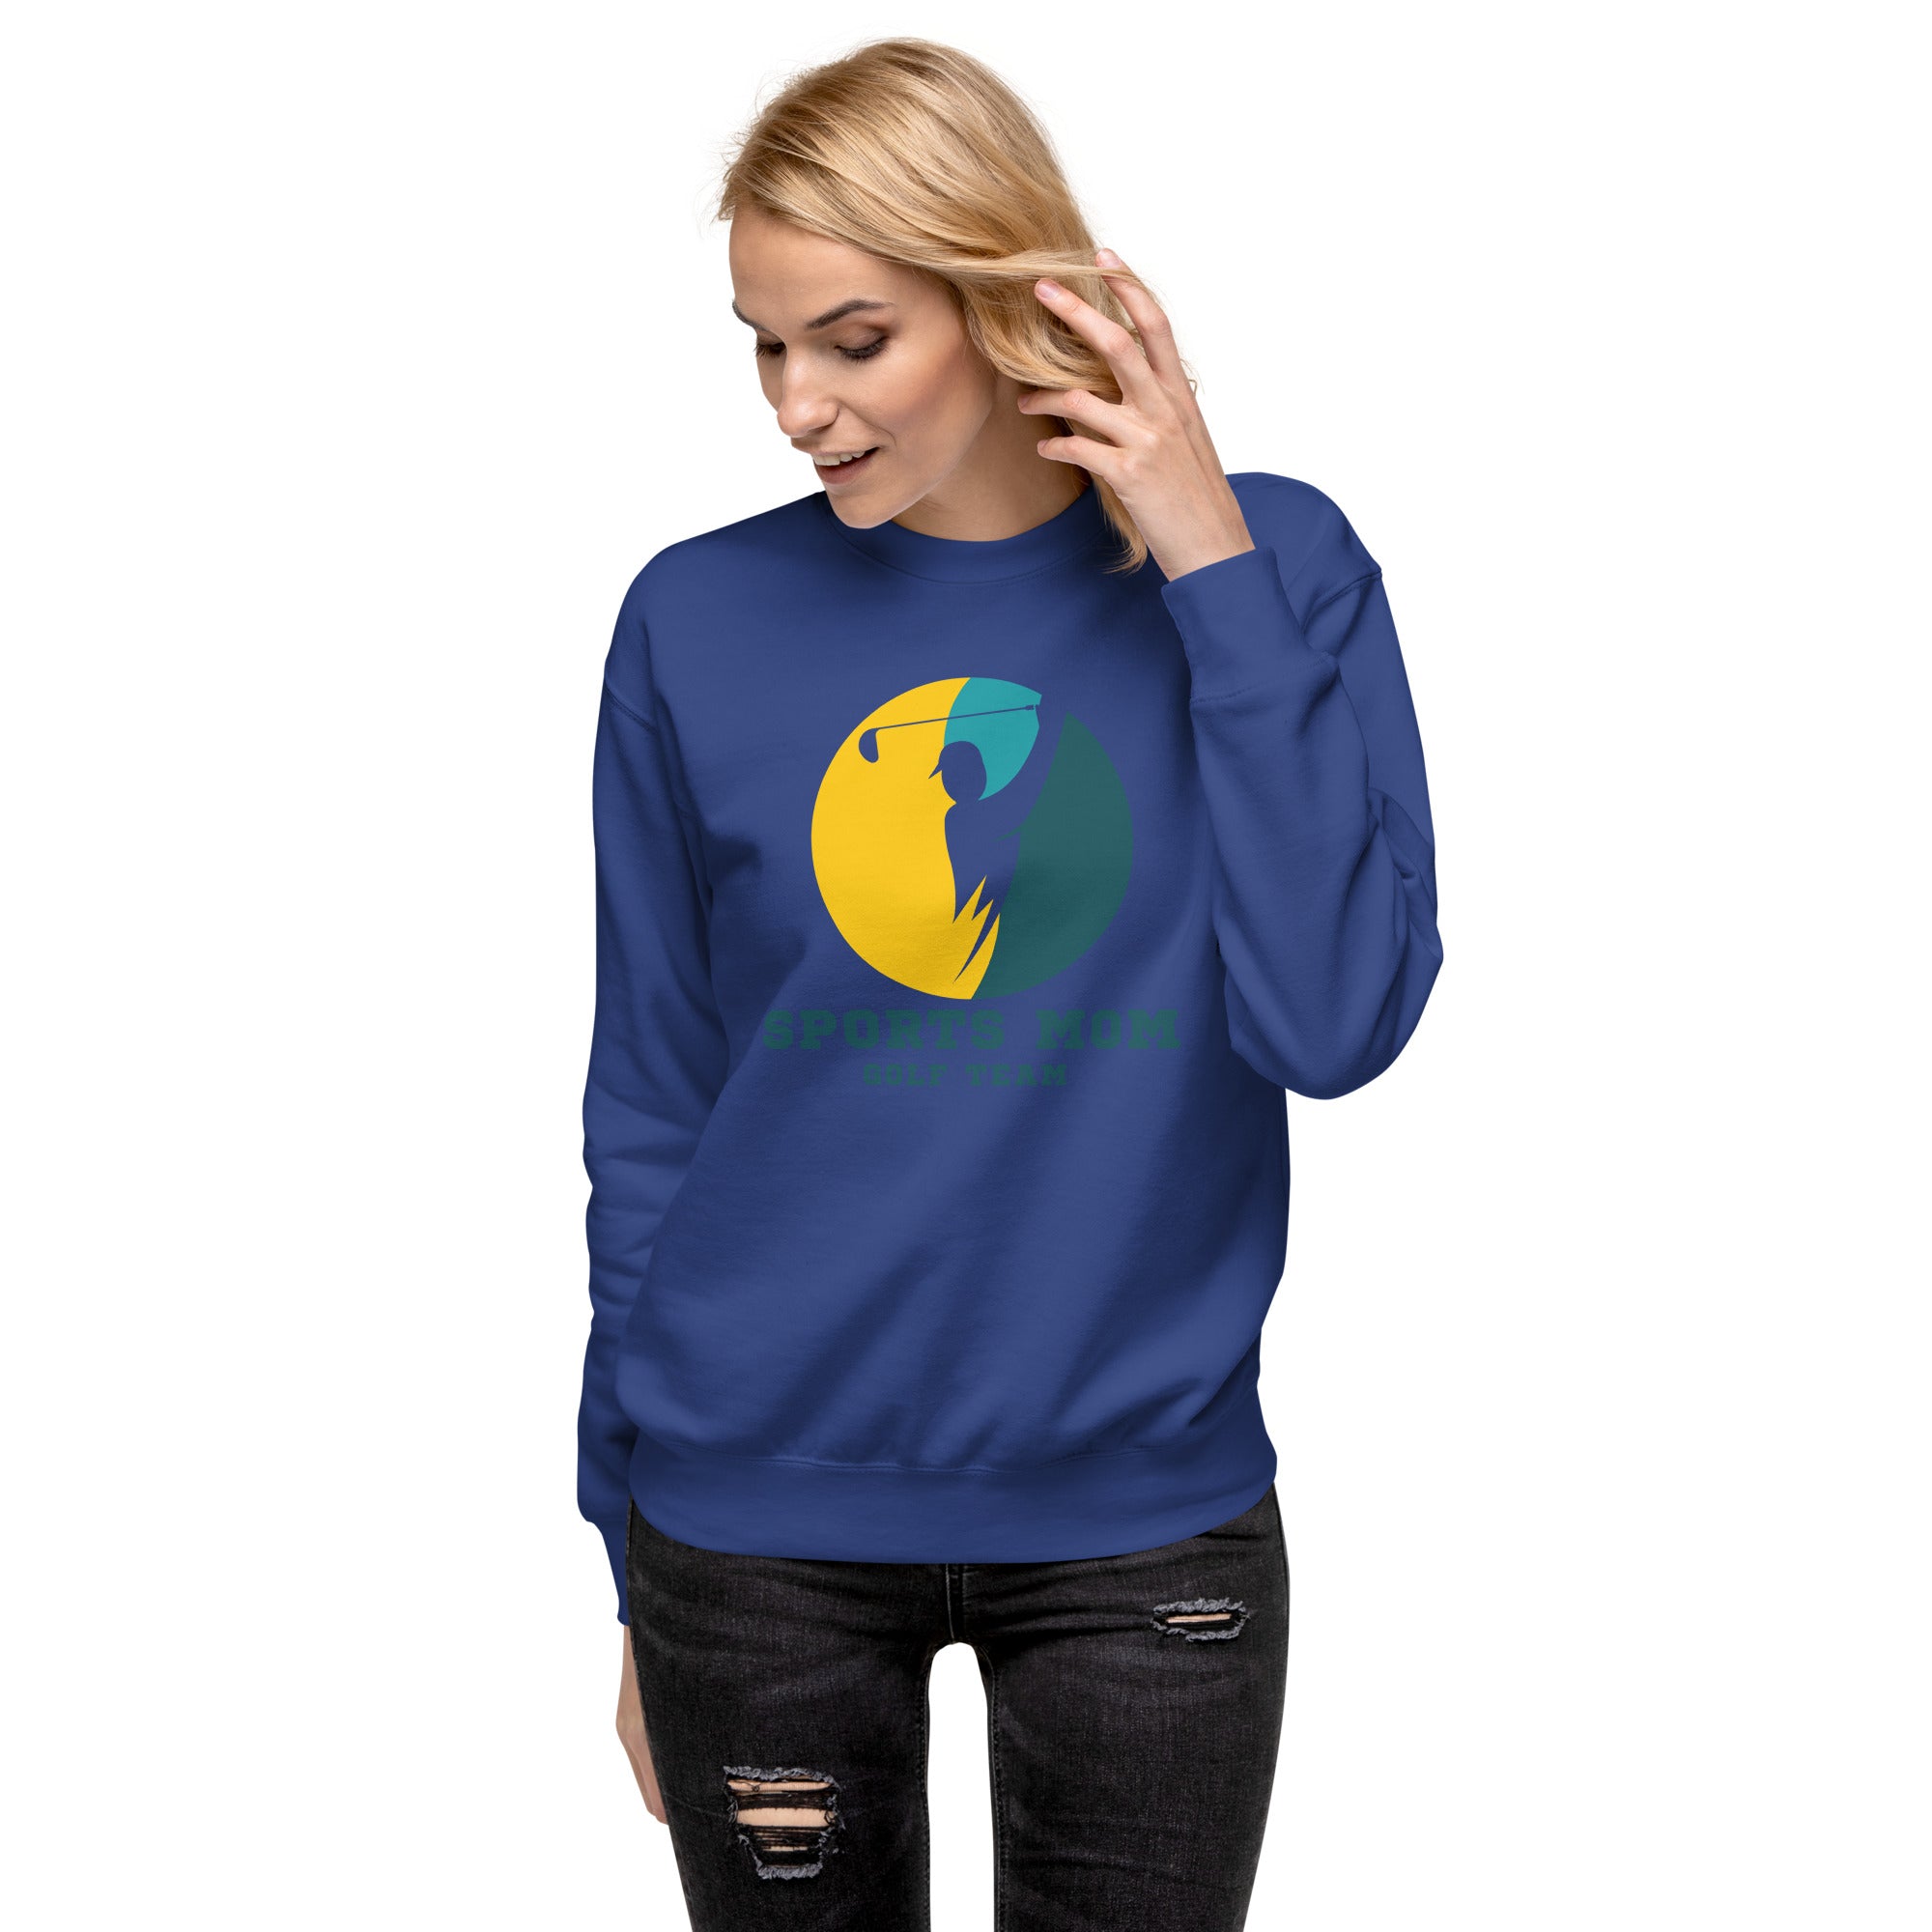 The Original Sports Mom Golf Team Women's Premium Sweatshirt